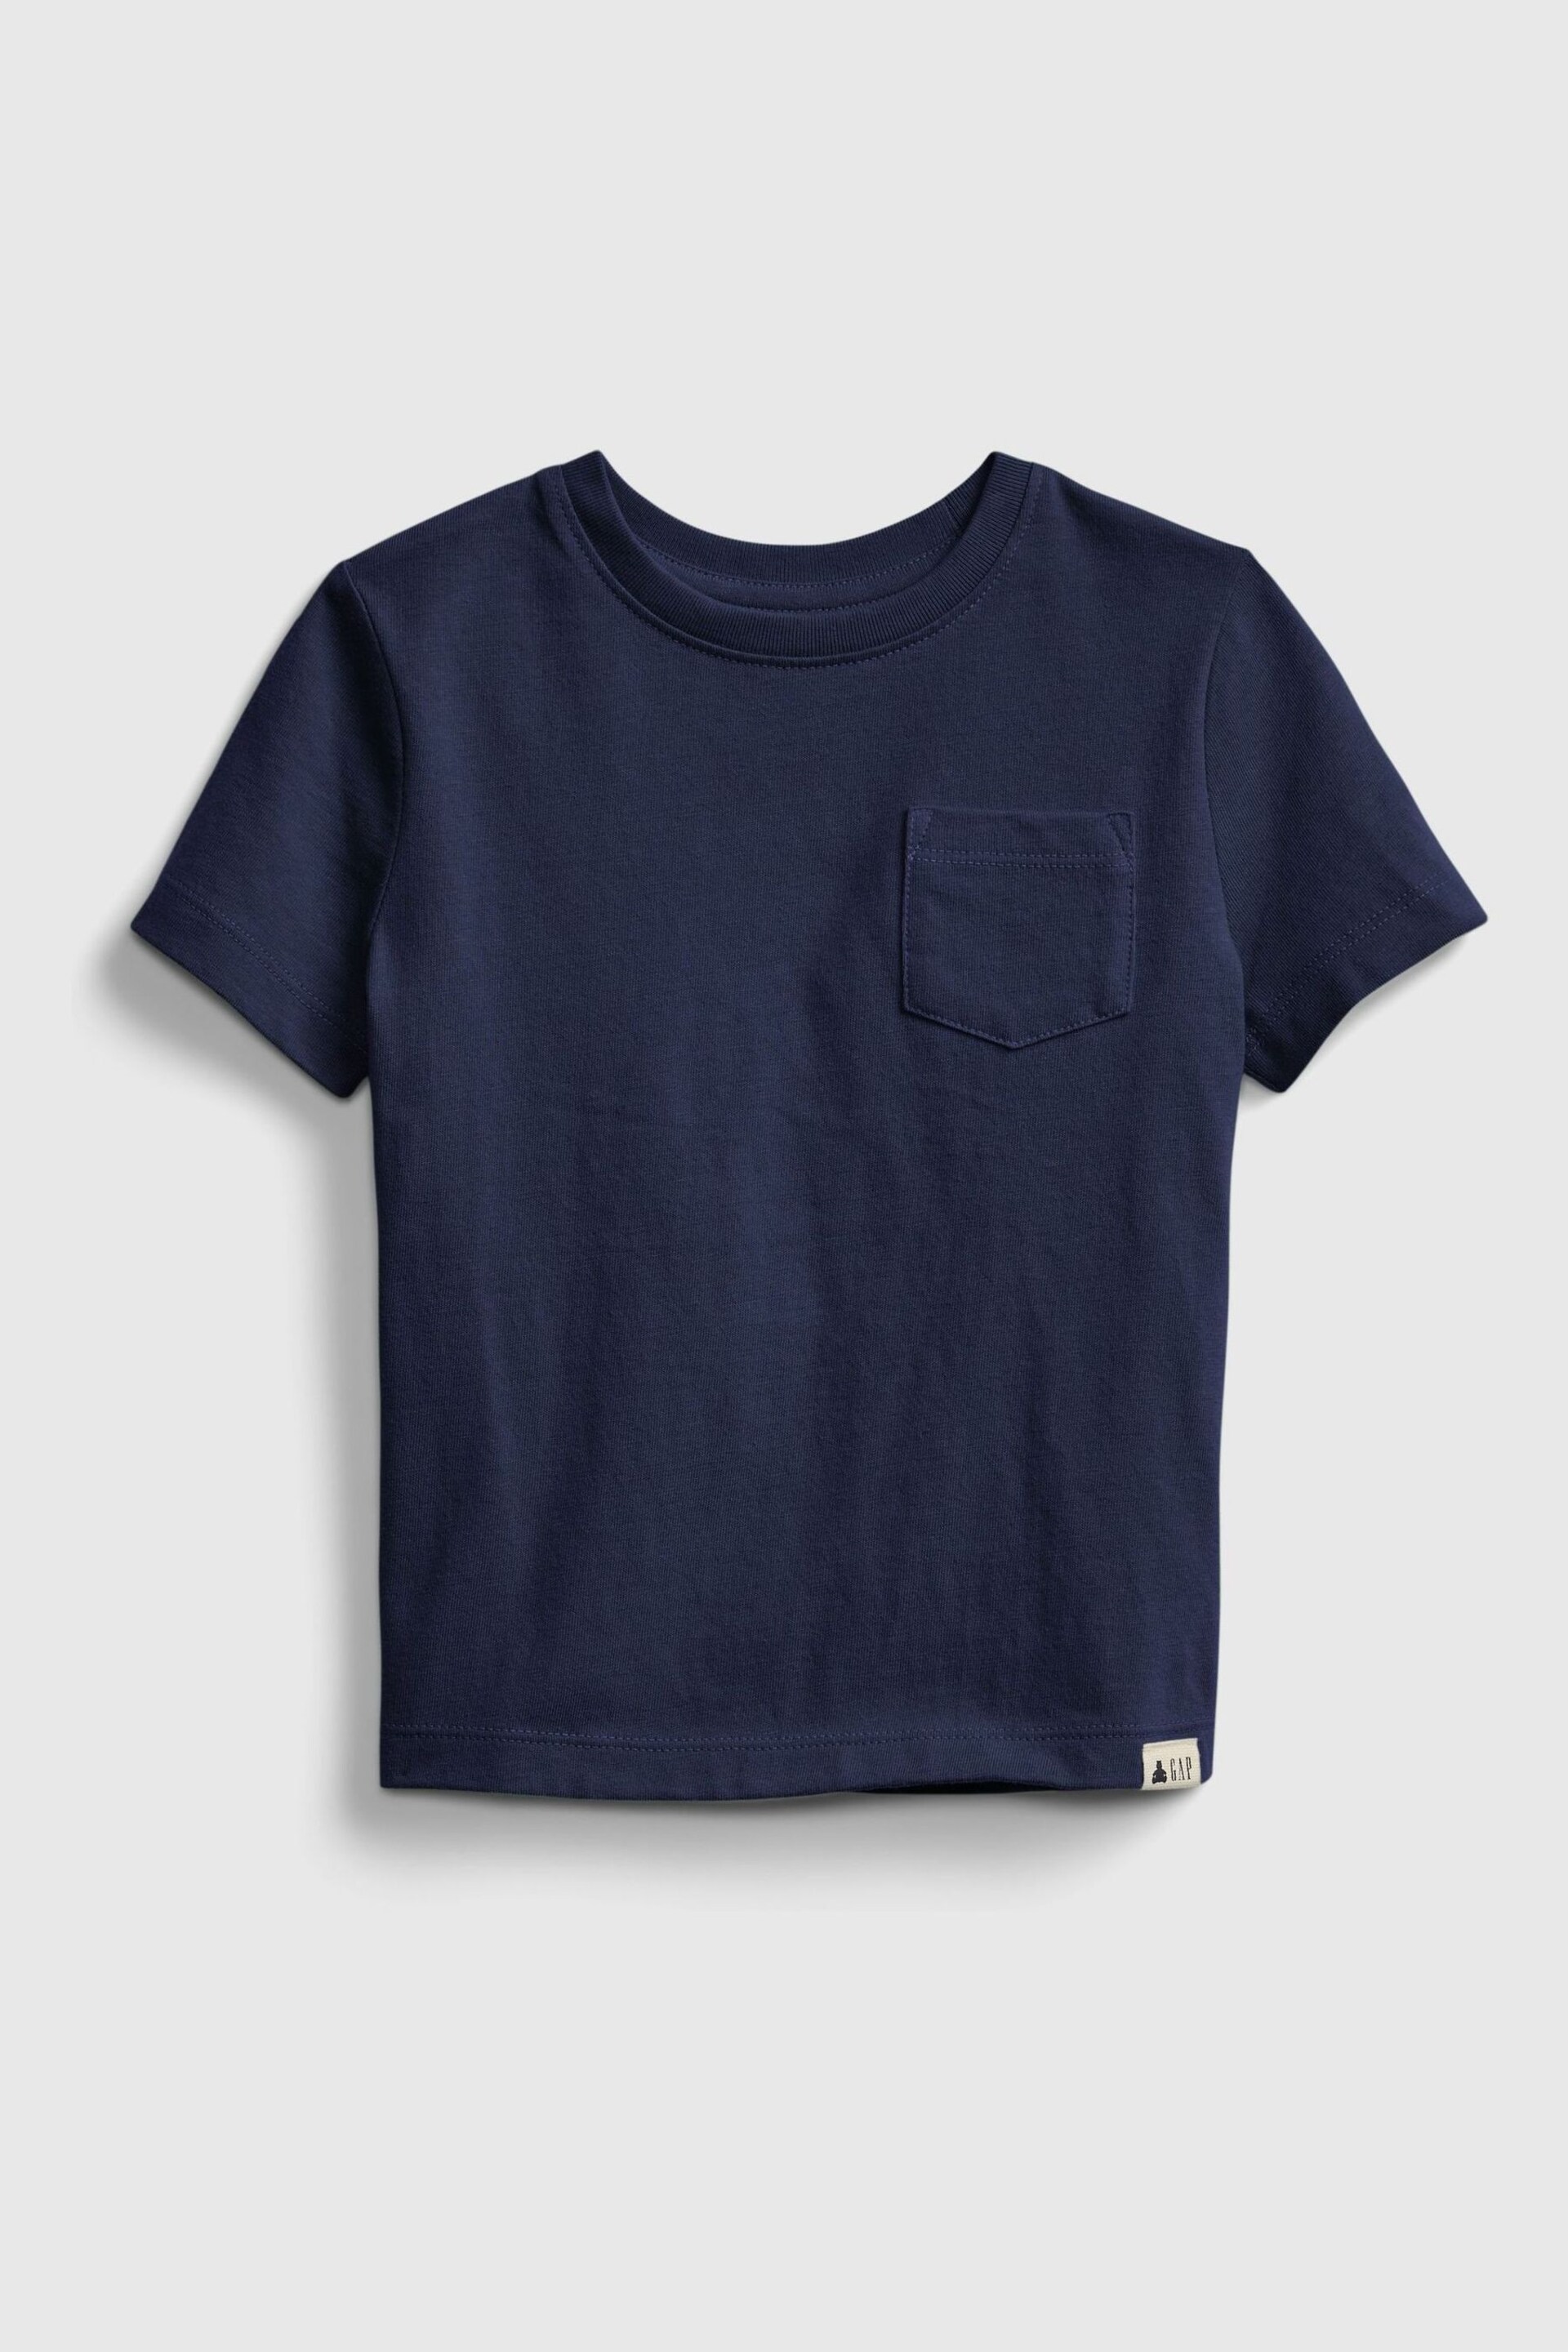 Gap Navy Blue Pocket Short Sleeve Crew Neck T-Shirt (12mths-5yrs) - Image 1 of 1